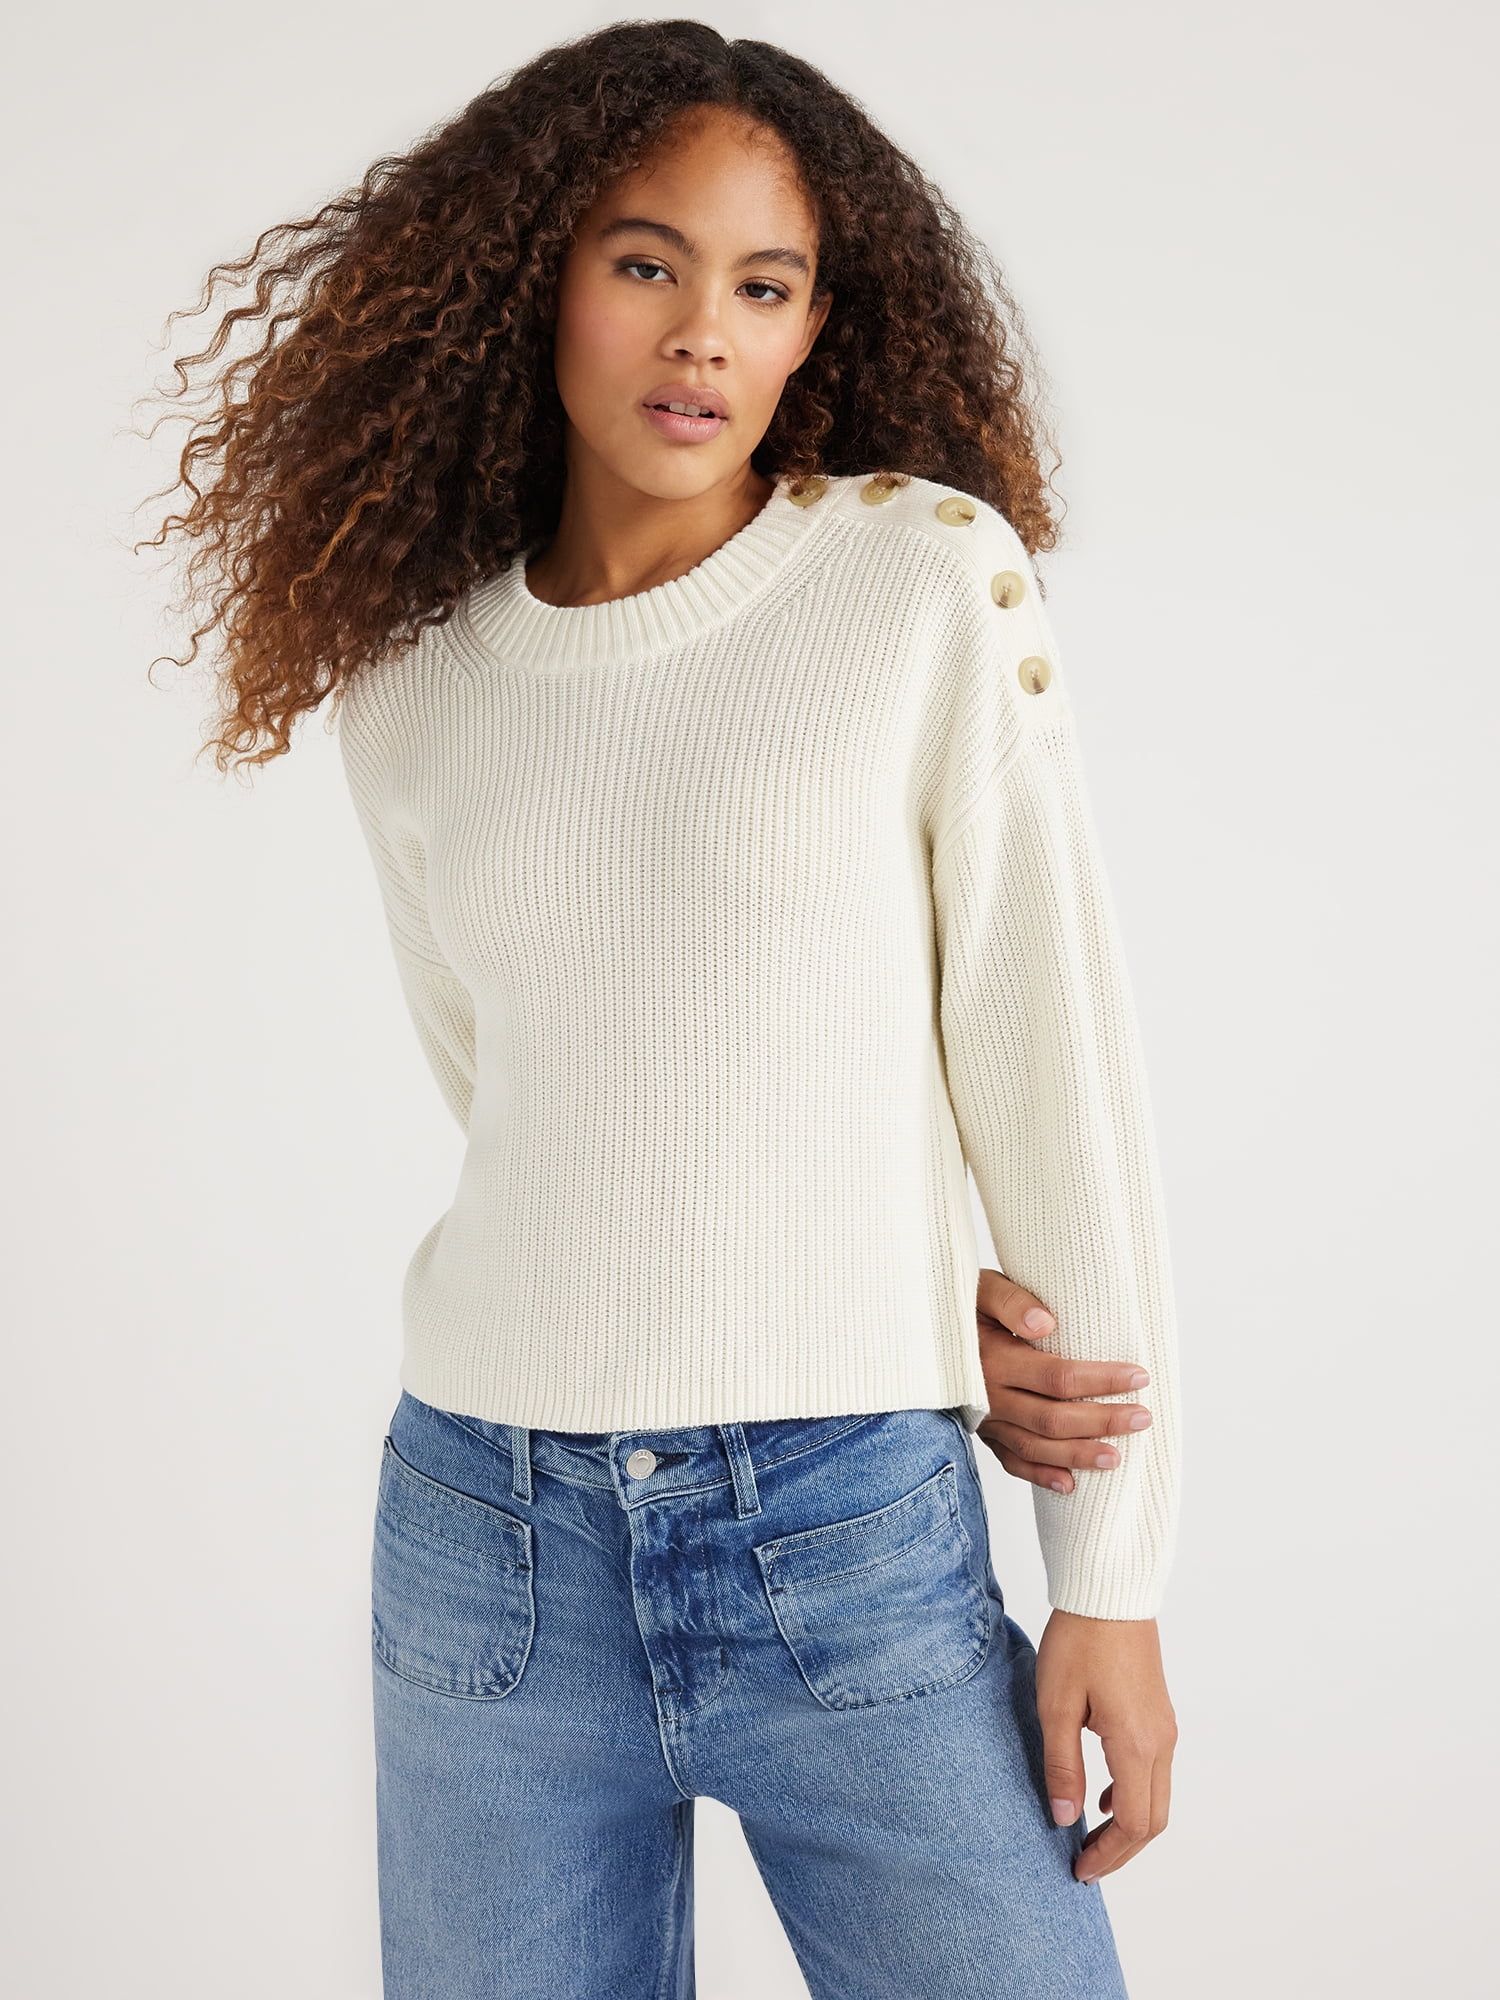 Free Assembly Women's Long Sleeve Button Shoulder Sweater, Midweight, Sizes XS-XXXL | Walmart (US)